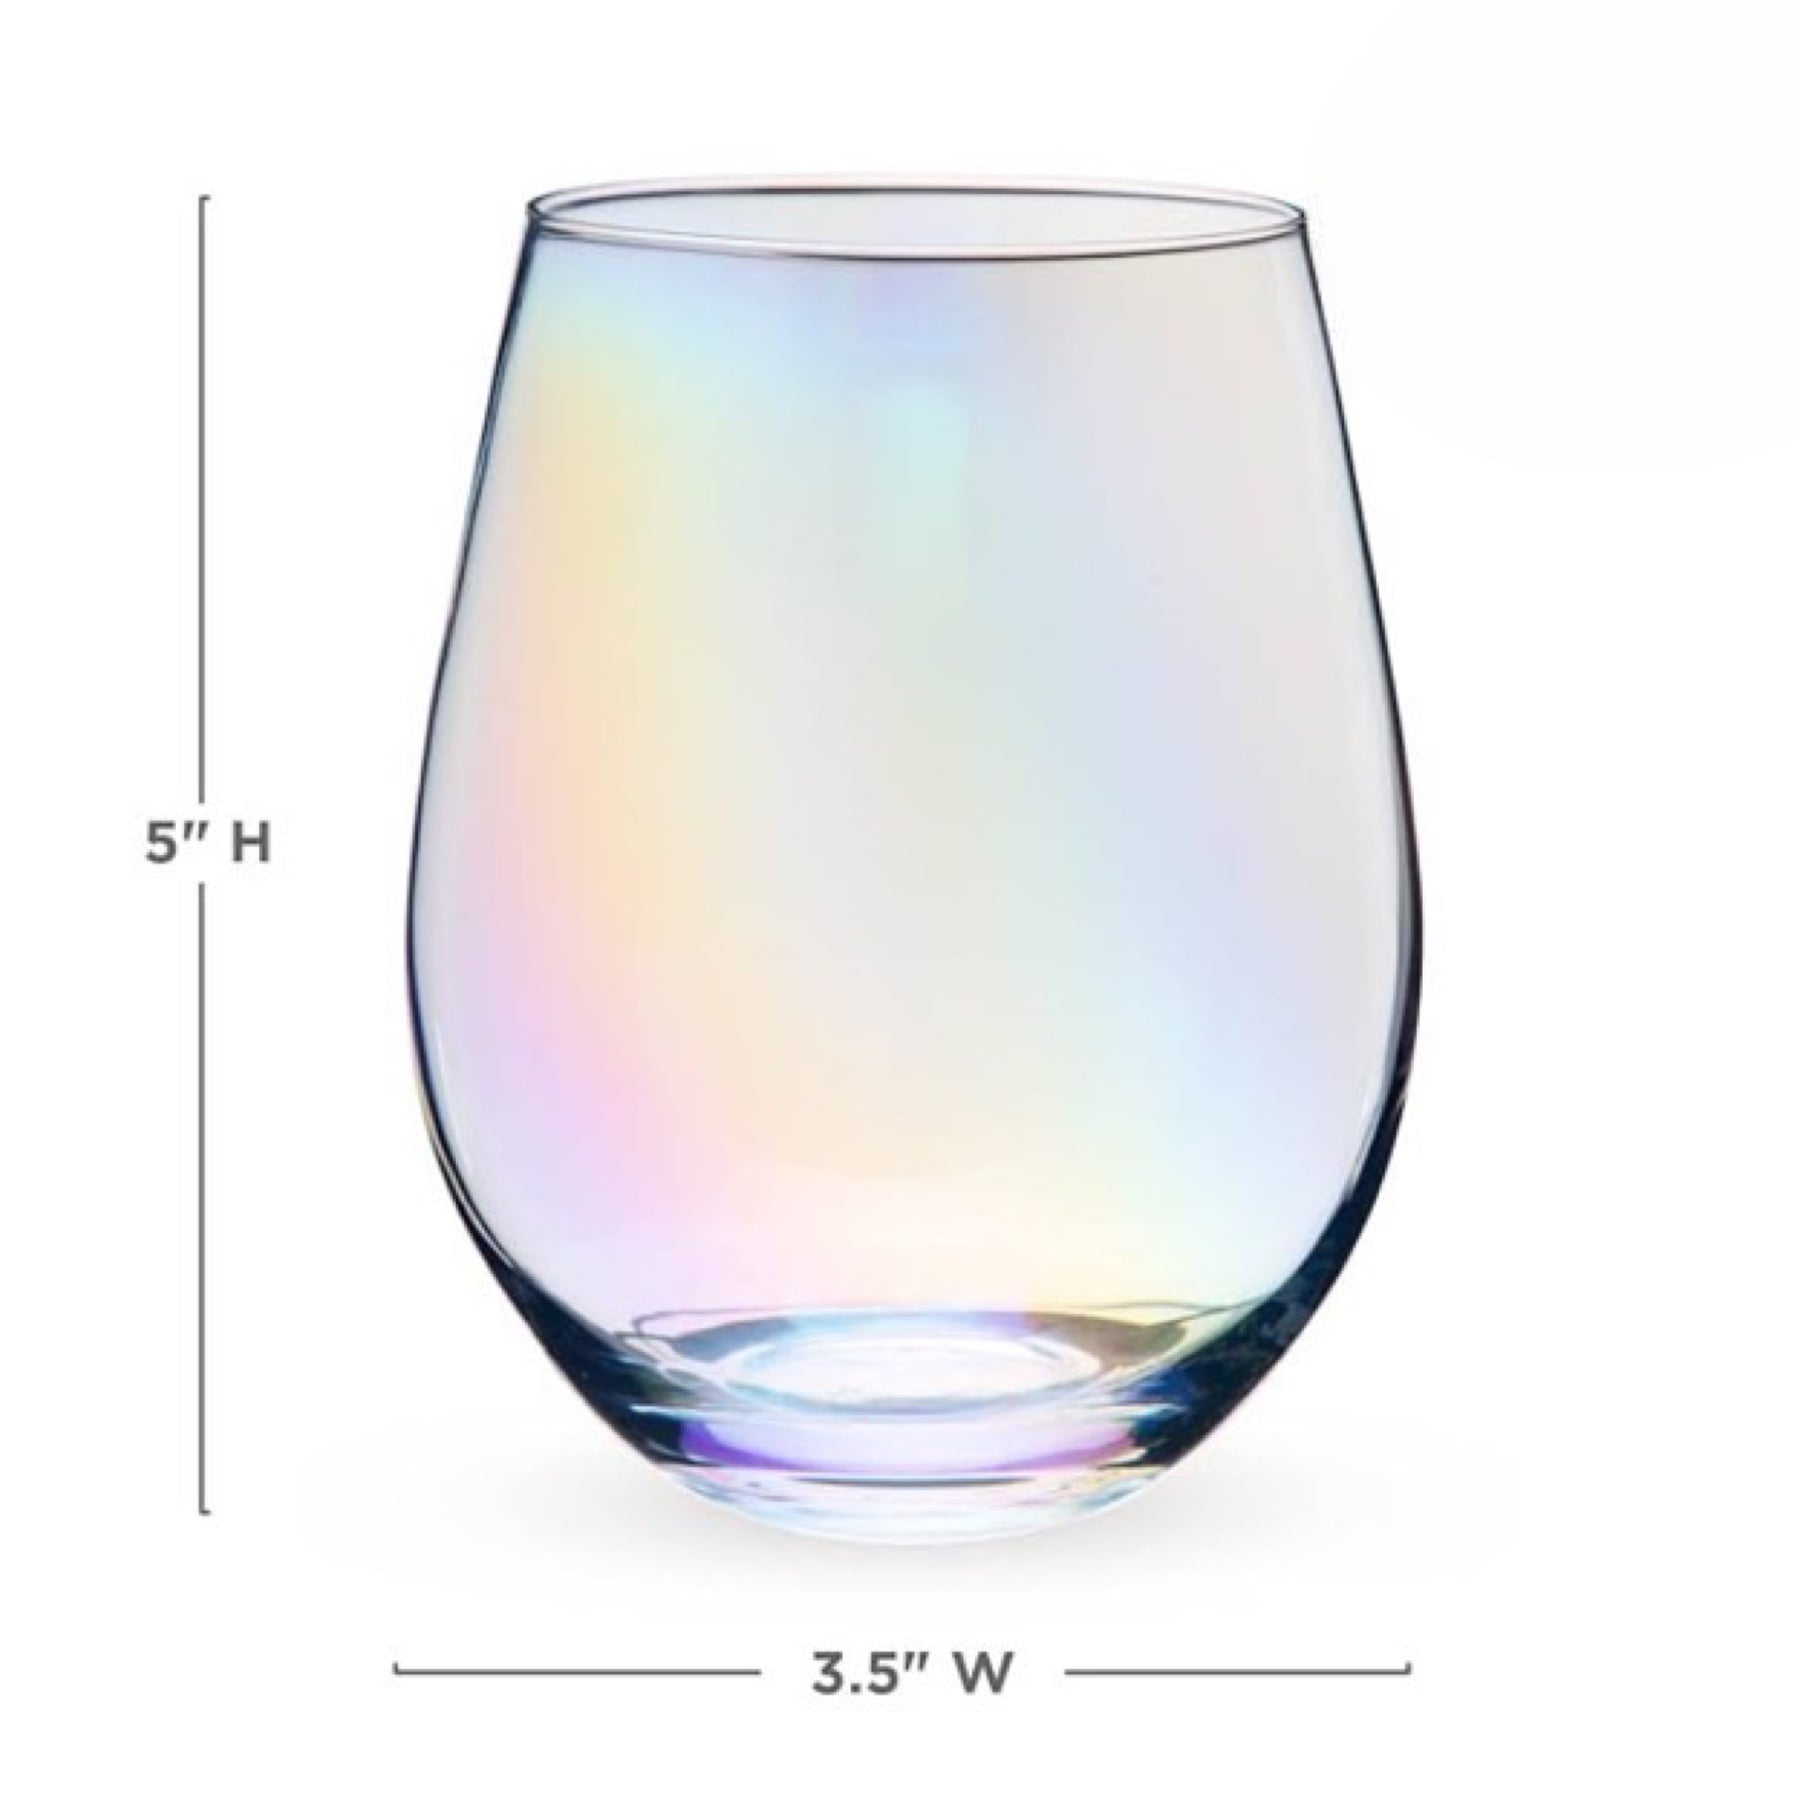 2pc Dwell Studio 22oz Glass Stemless Wine Glasses - Rainbow Iridescent